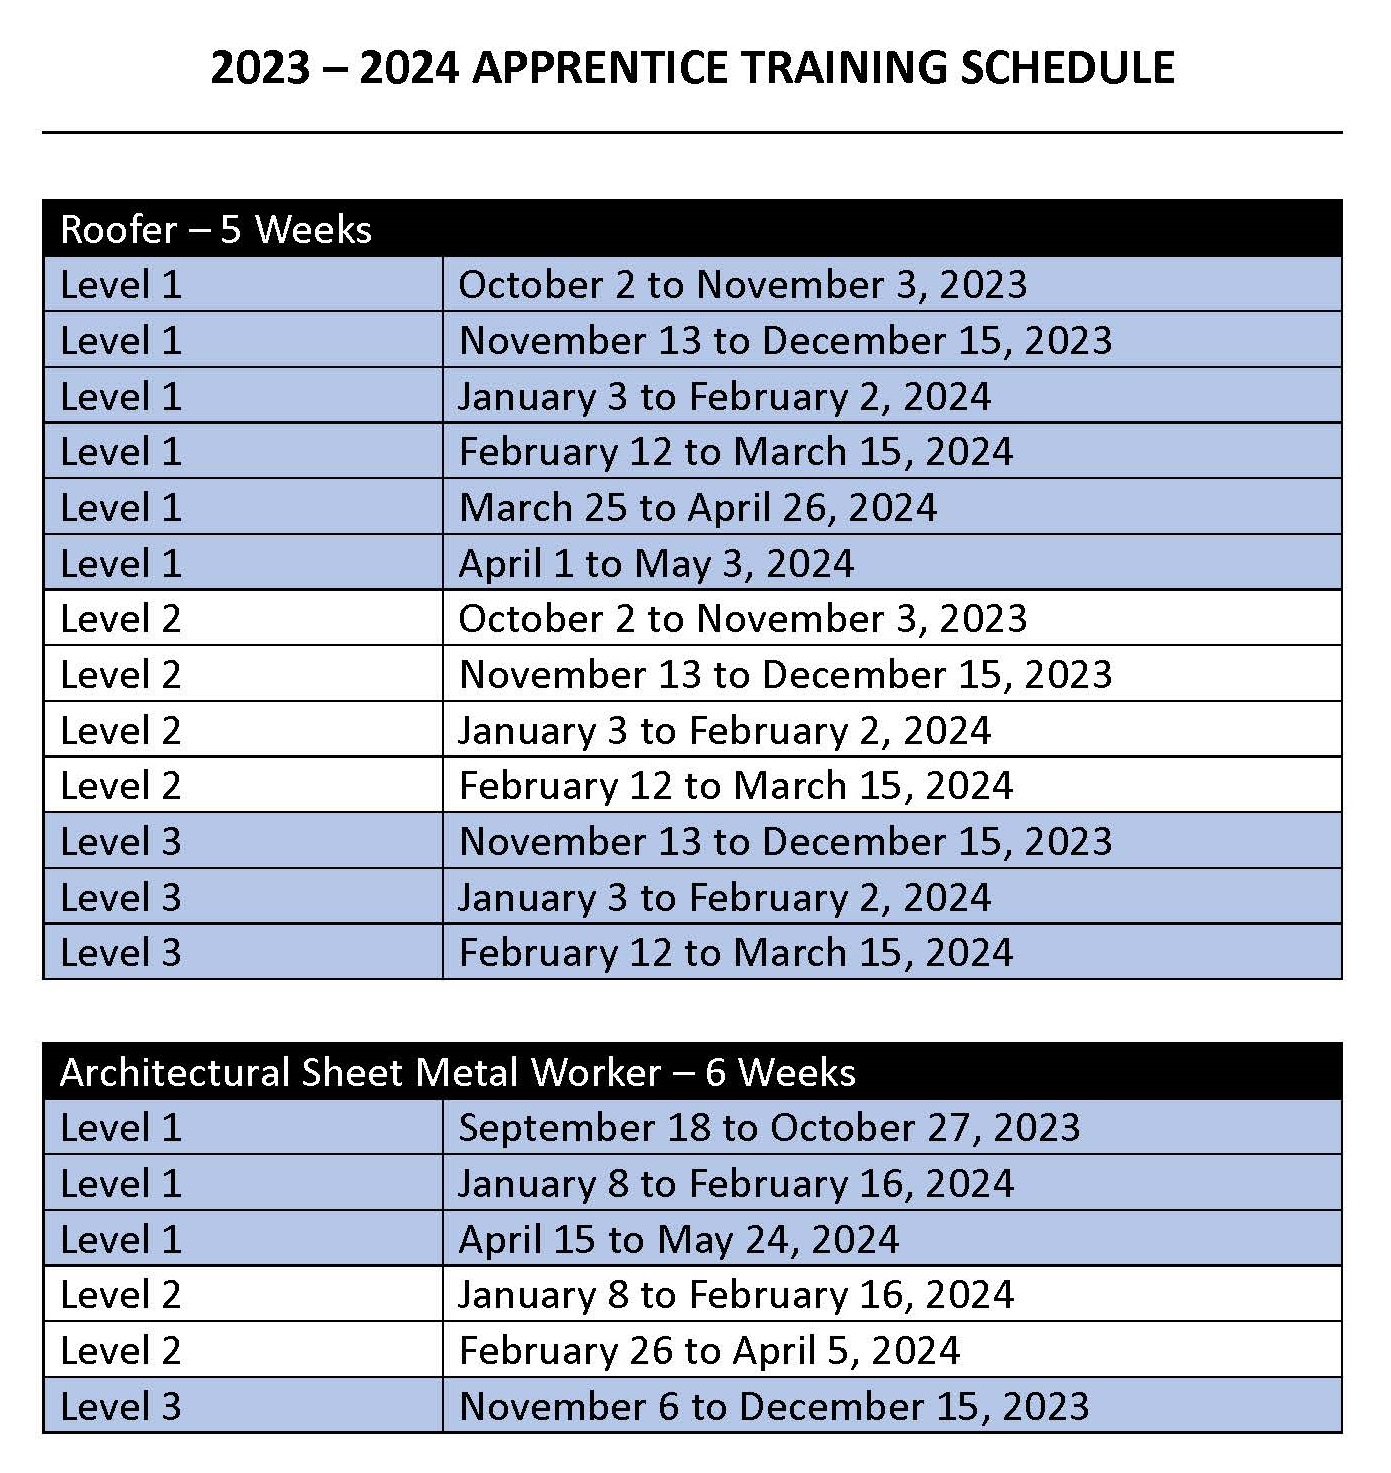 2023 – 2024 Apprentice Training Schedule